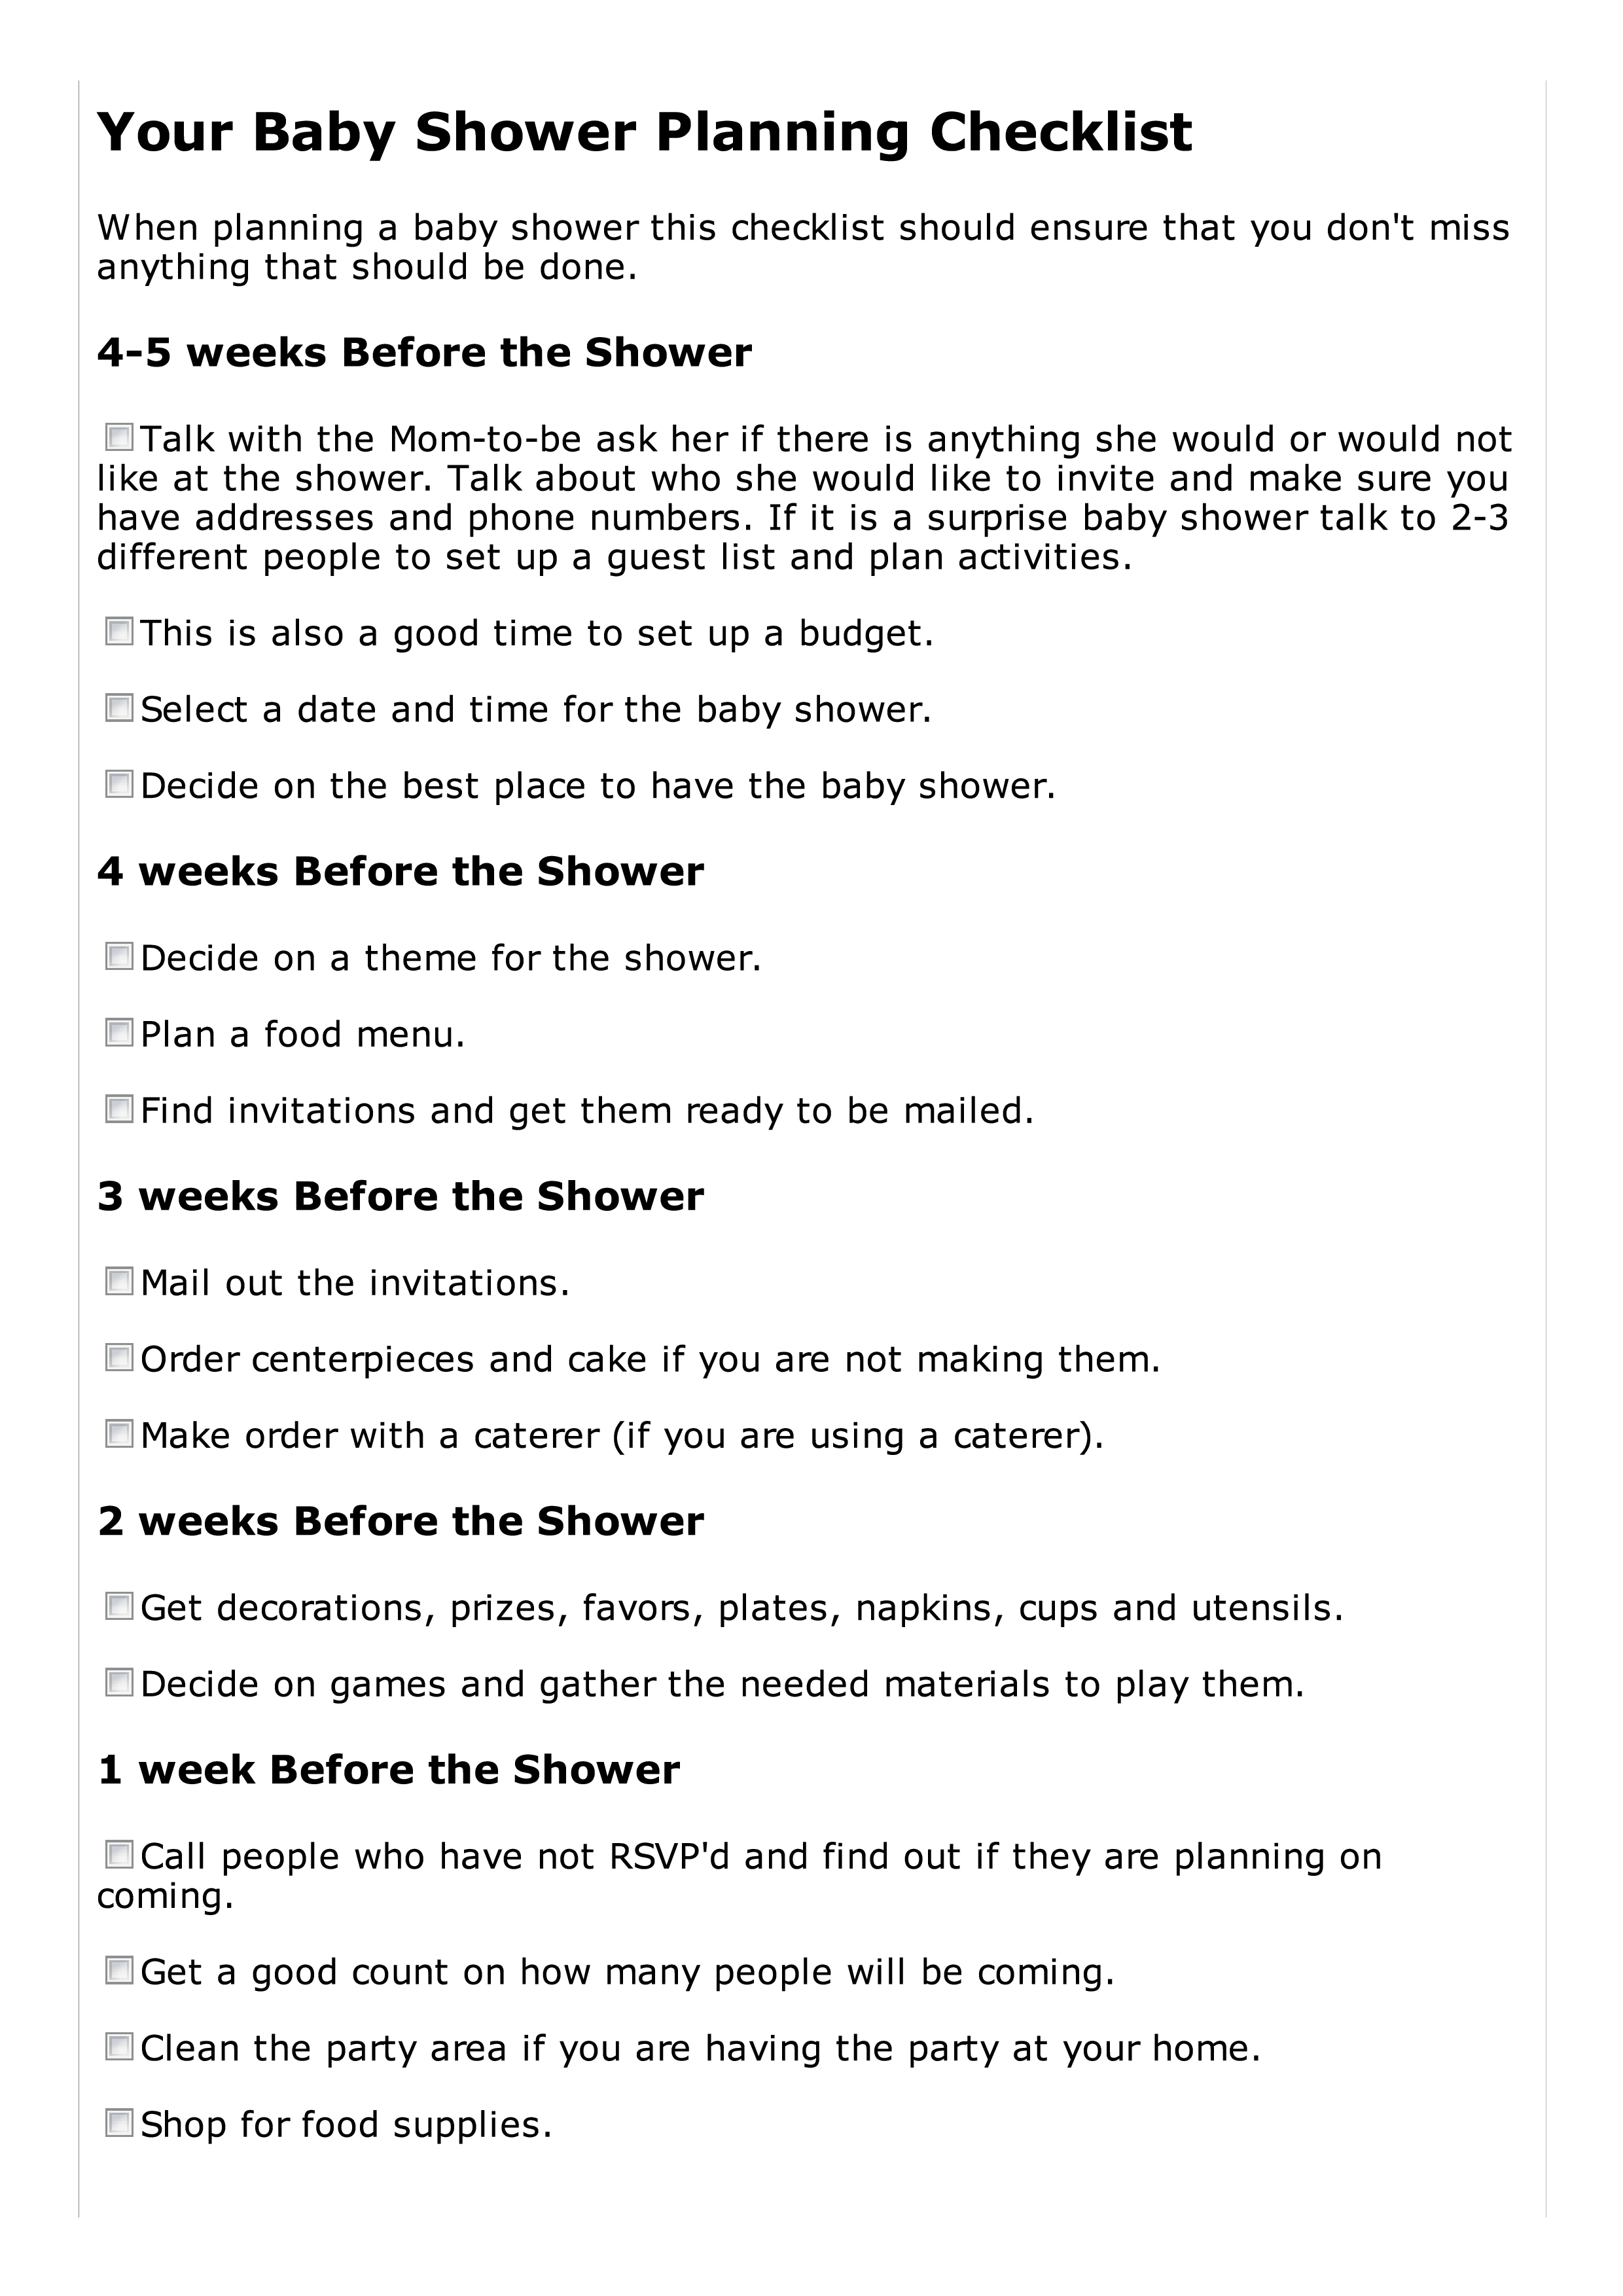 Baby Shower Planning Checklist main image